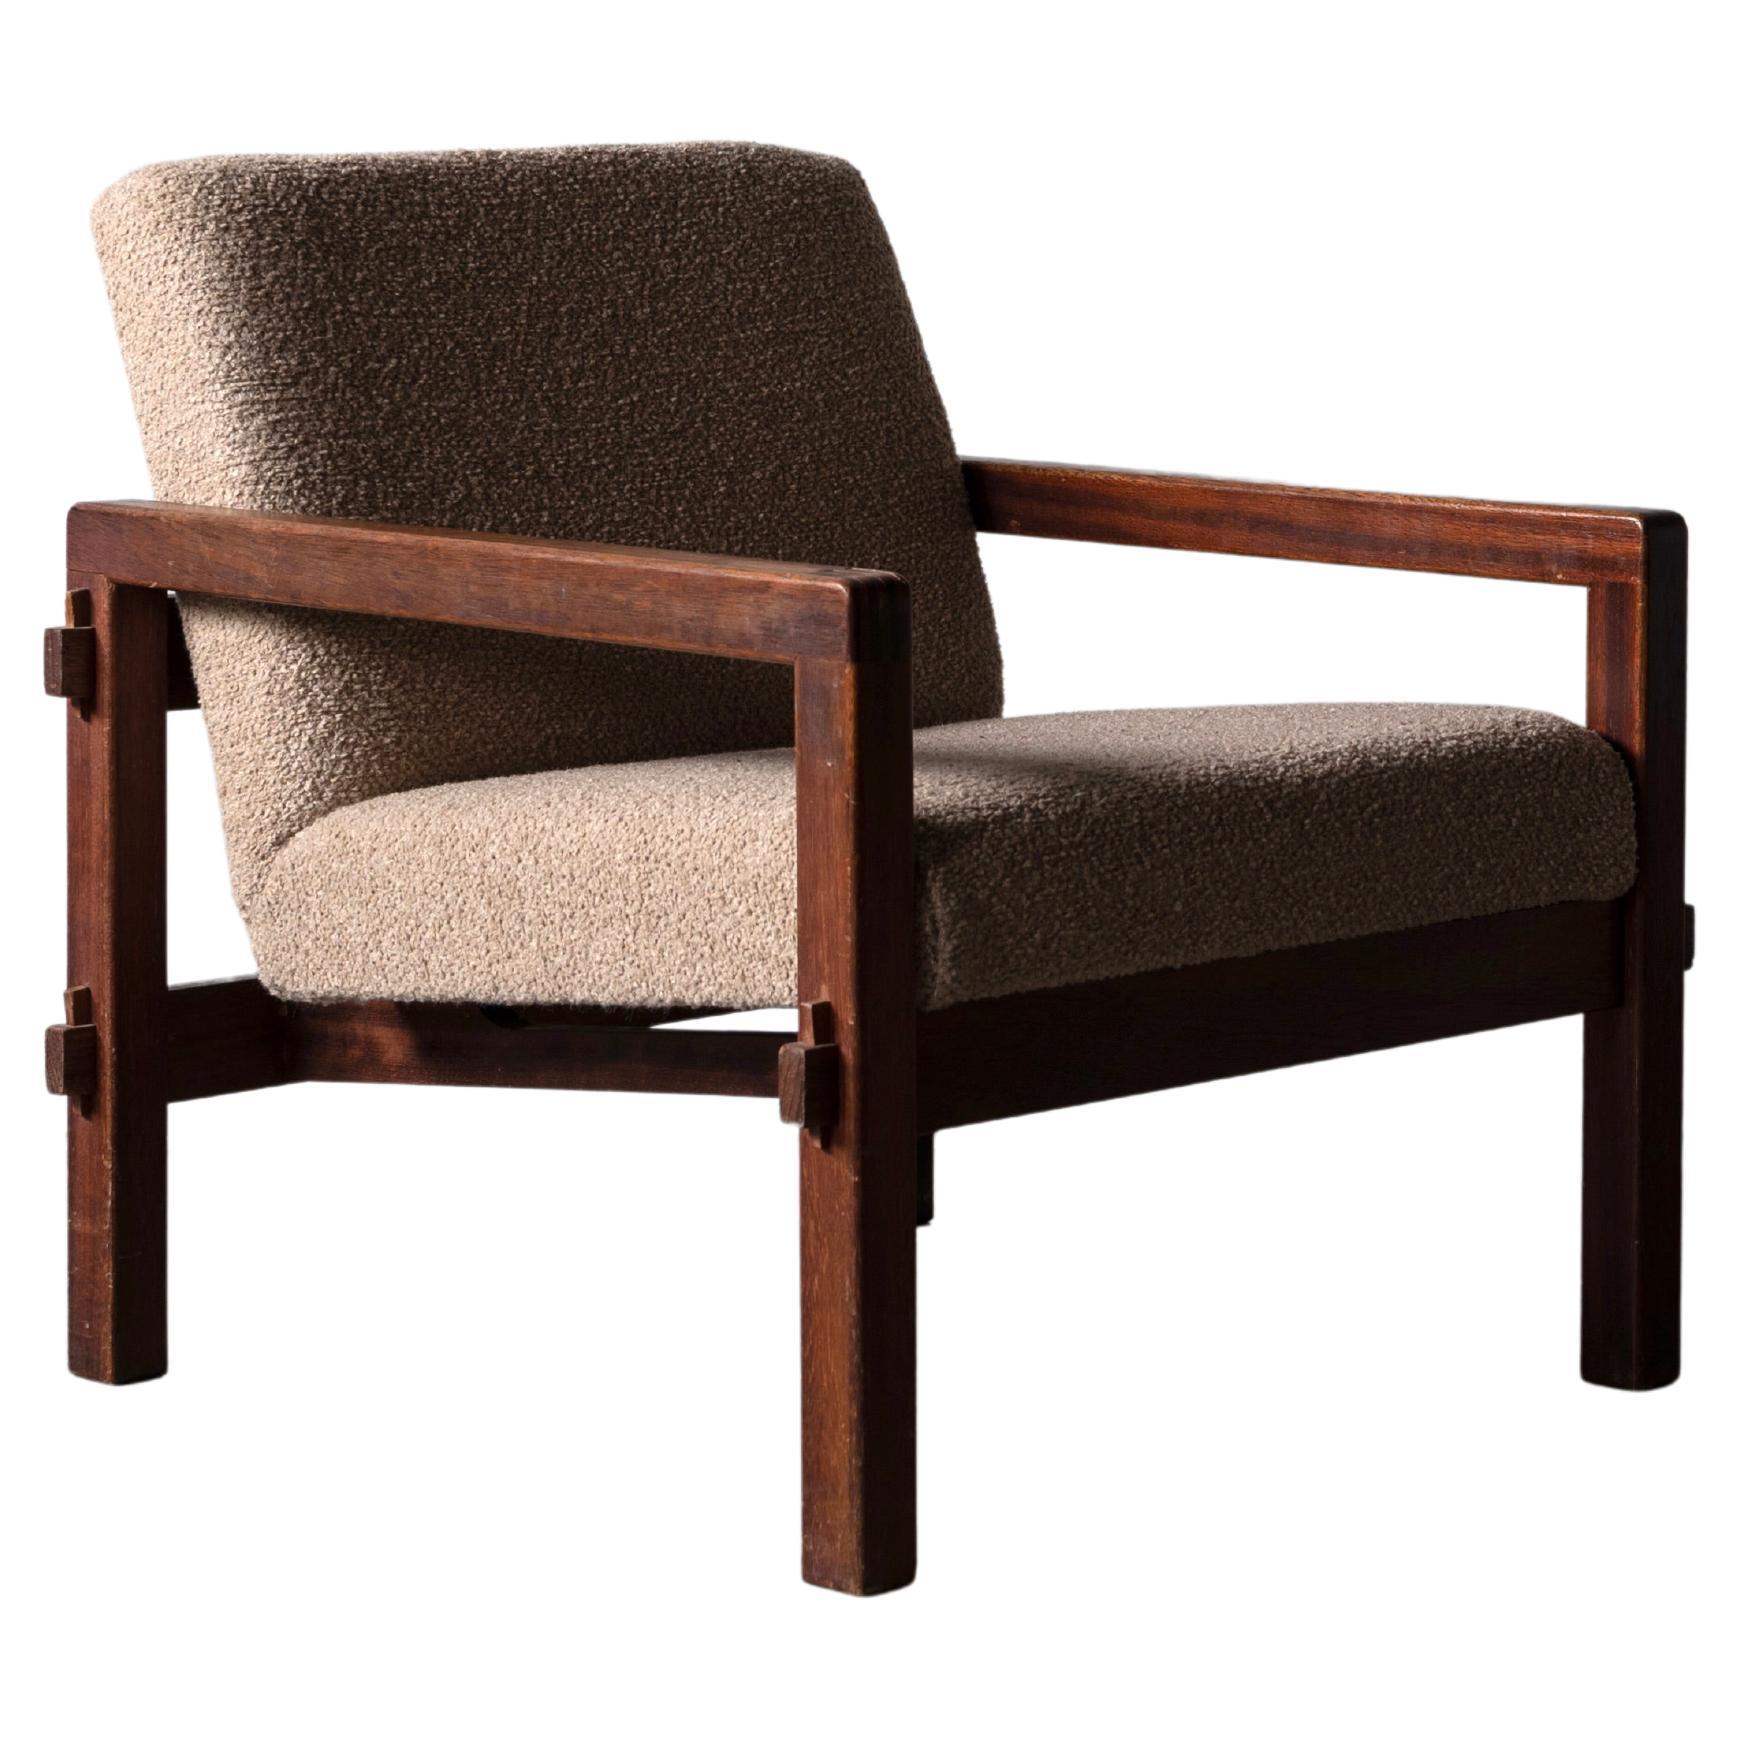 Reino Ruokolainen, "Stugo" Lounge Chair, Stained Oak, Fabric, Sweden 1959